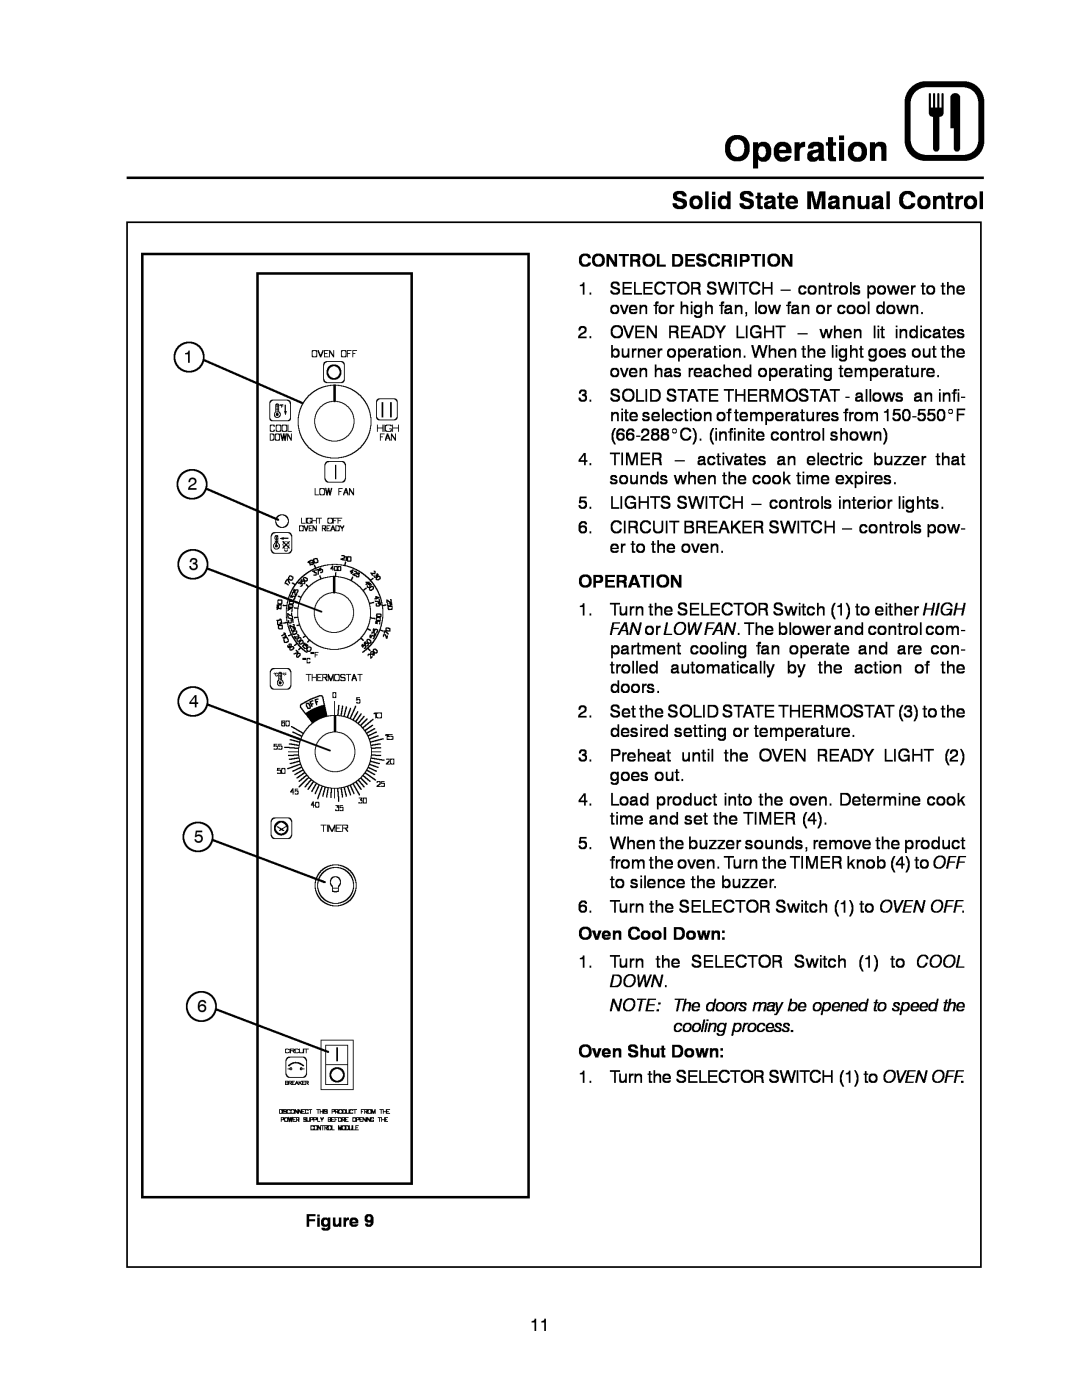 Blodgett MARK V XCEL CONVECTION OVEN manual Operation, Control Description, Oven Cool Down, Oven Shut Down 